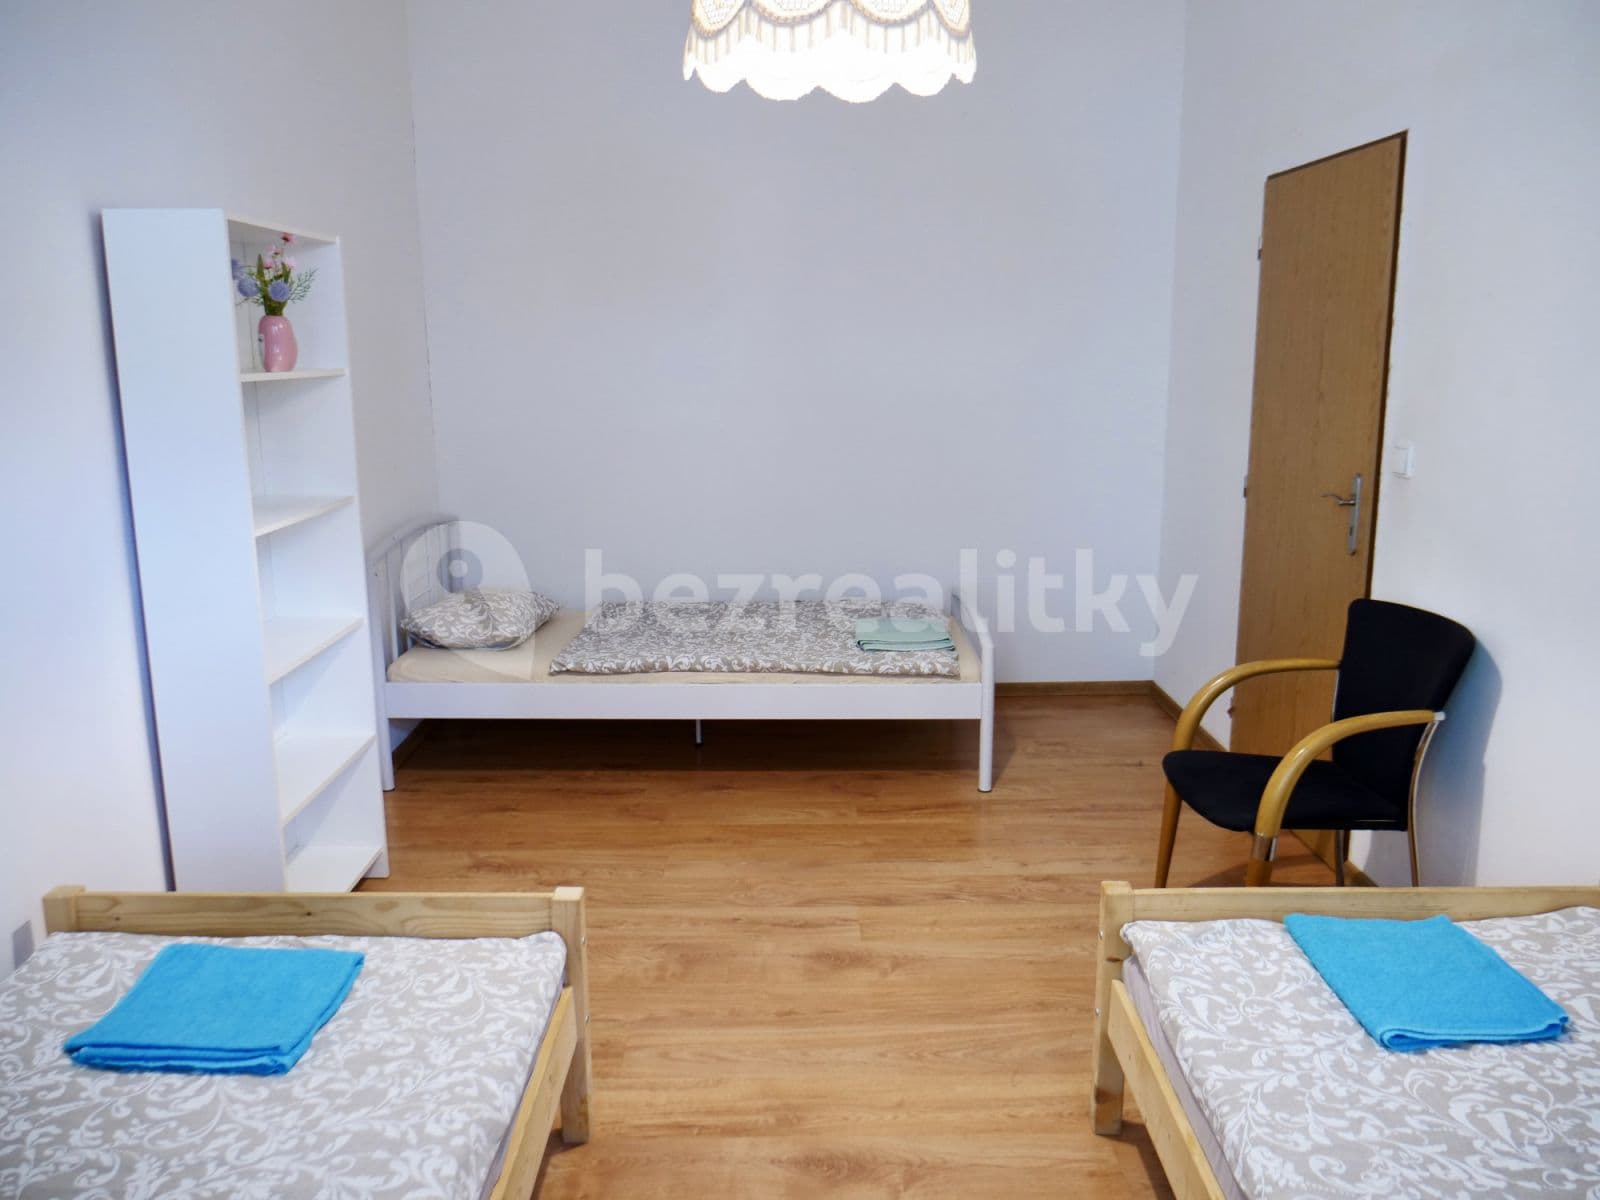 Studio flat to rent, 55 m², Ruská, Teplice, Ústecký Region